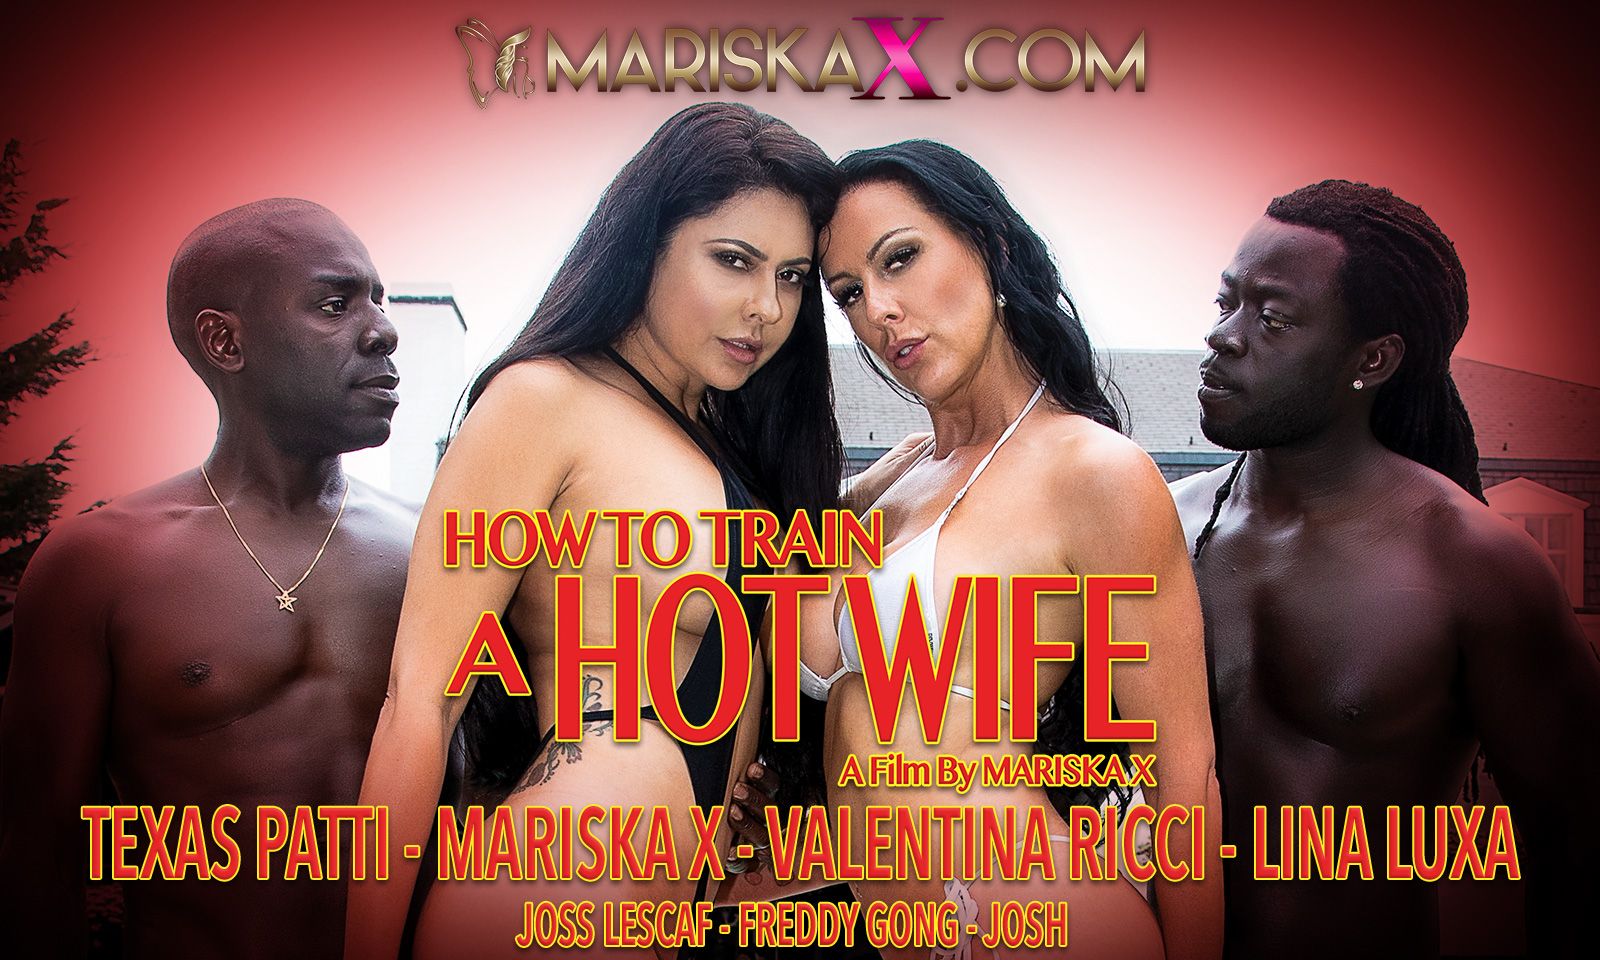 Mariska X Debuts 'How to Train a Hot Wife'